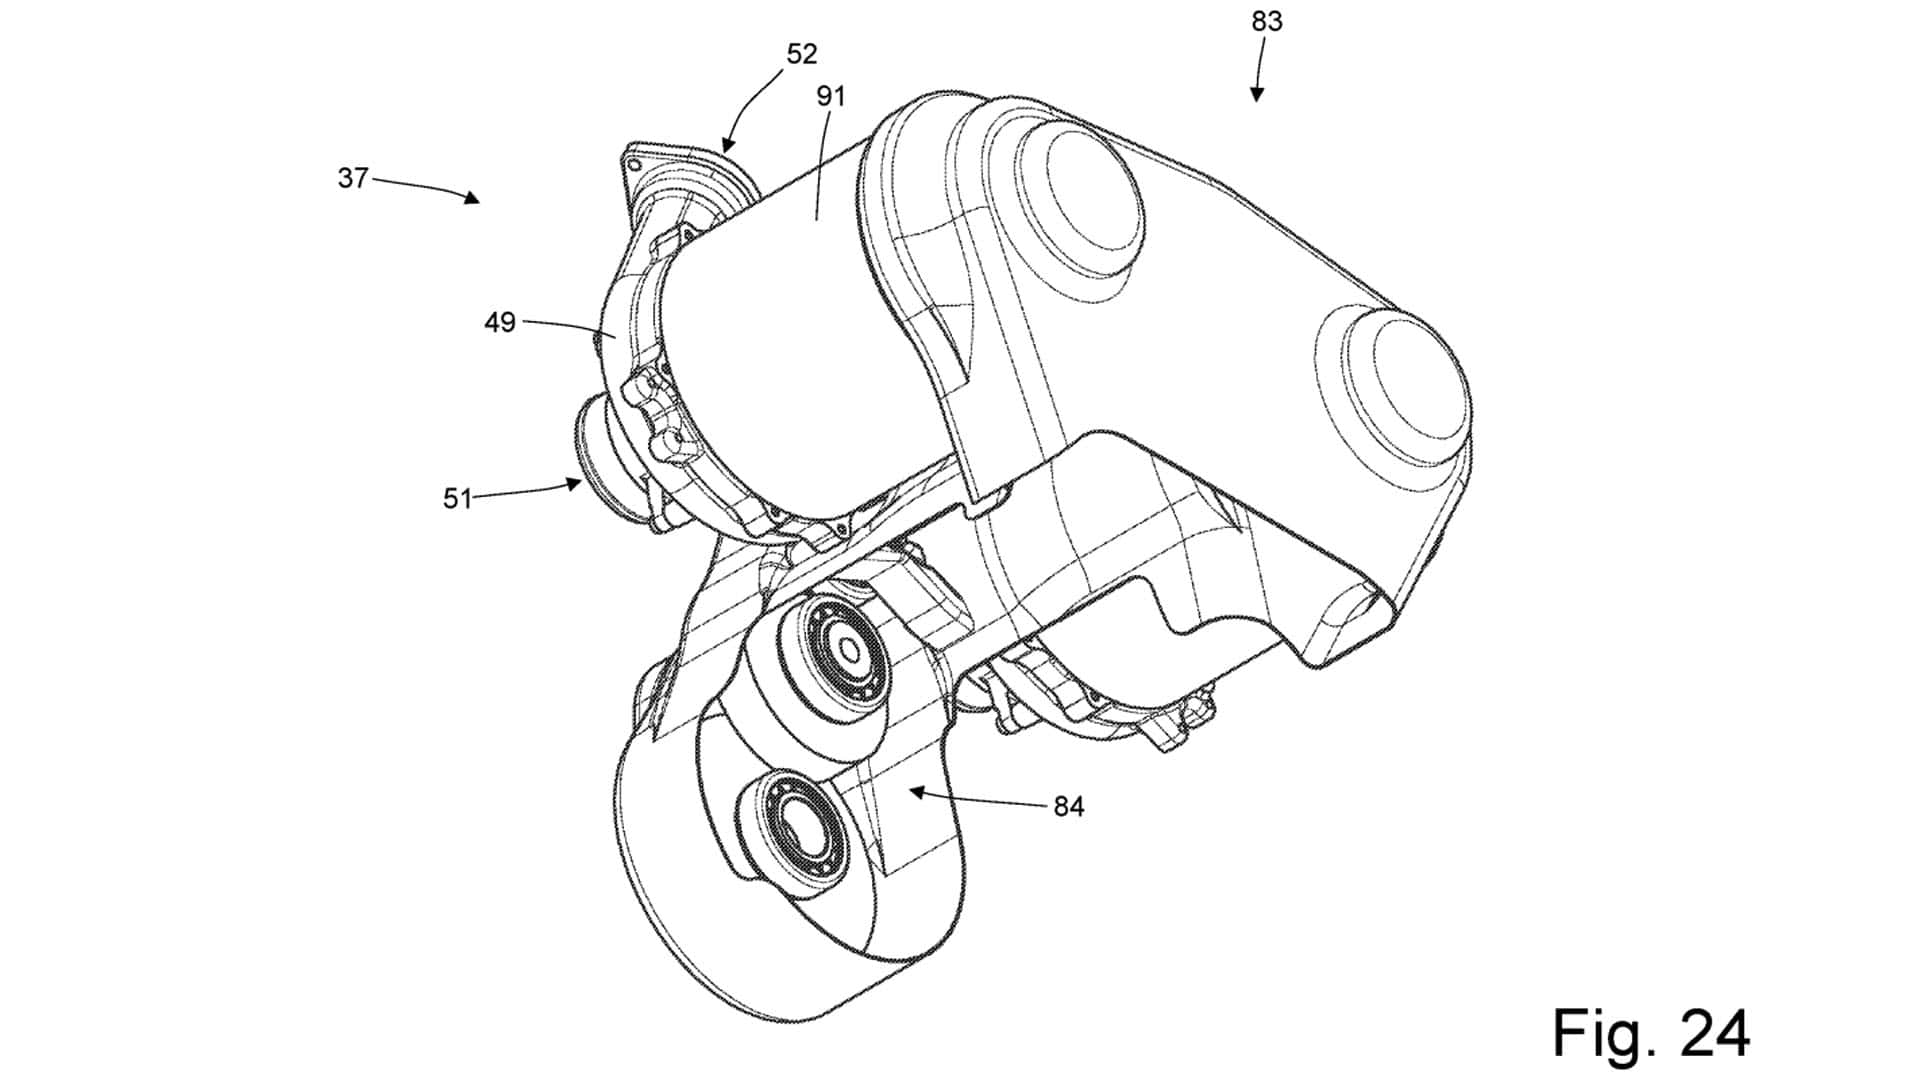 Patente de motor ferrari: sistema tipo MGU-H